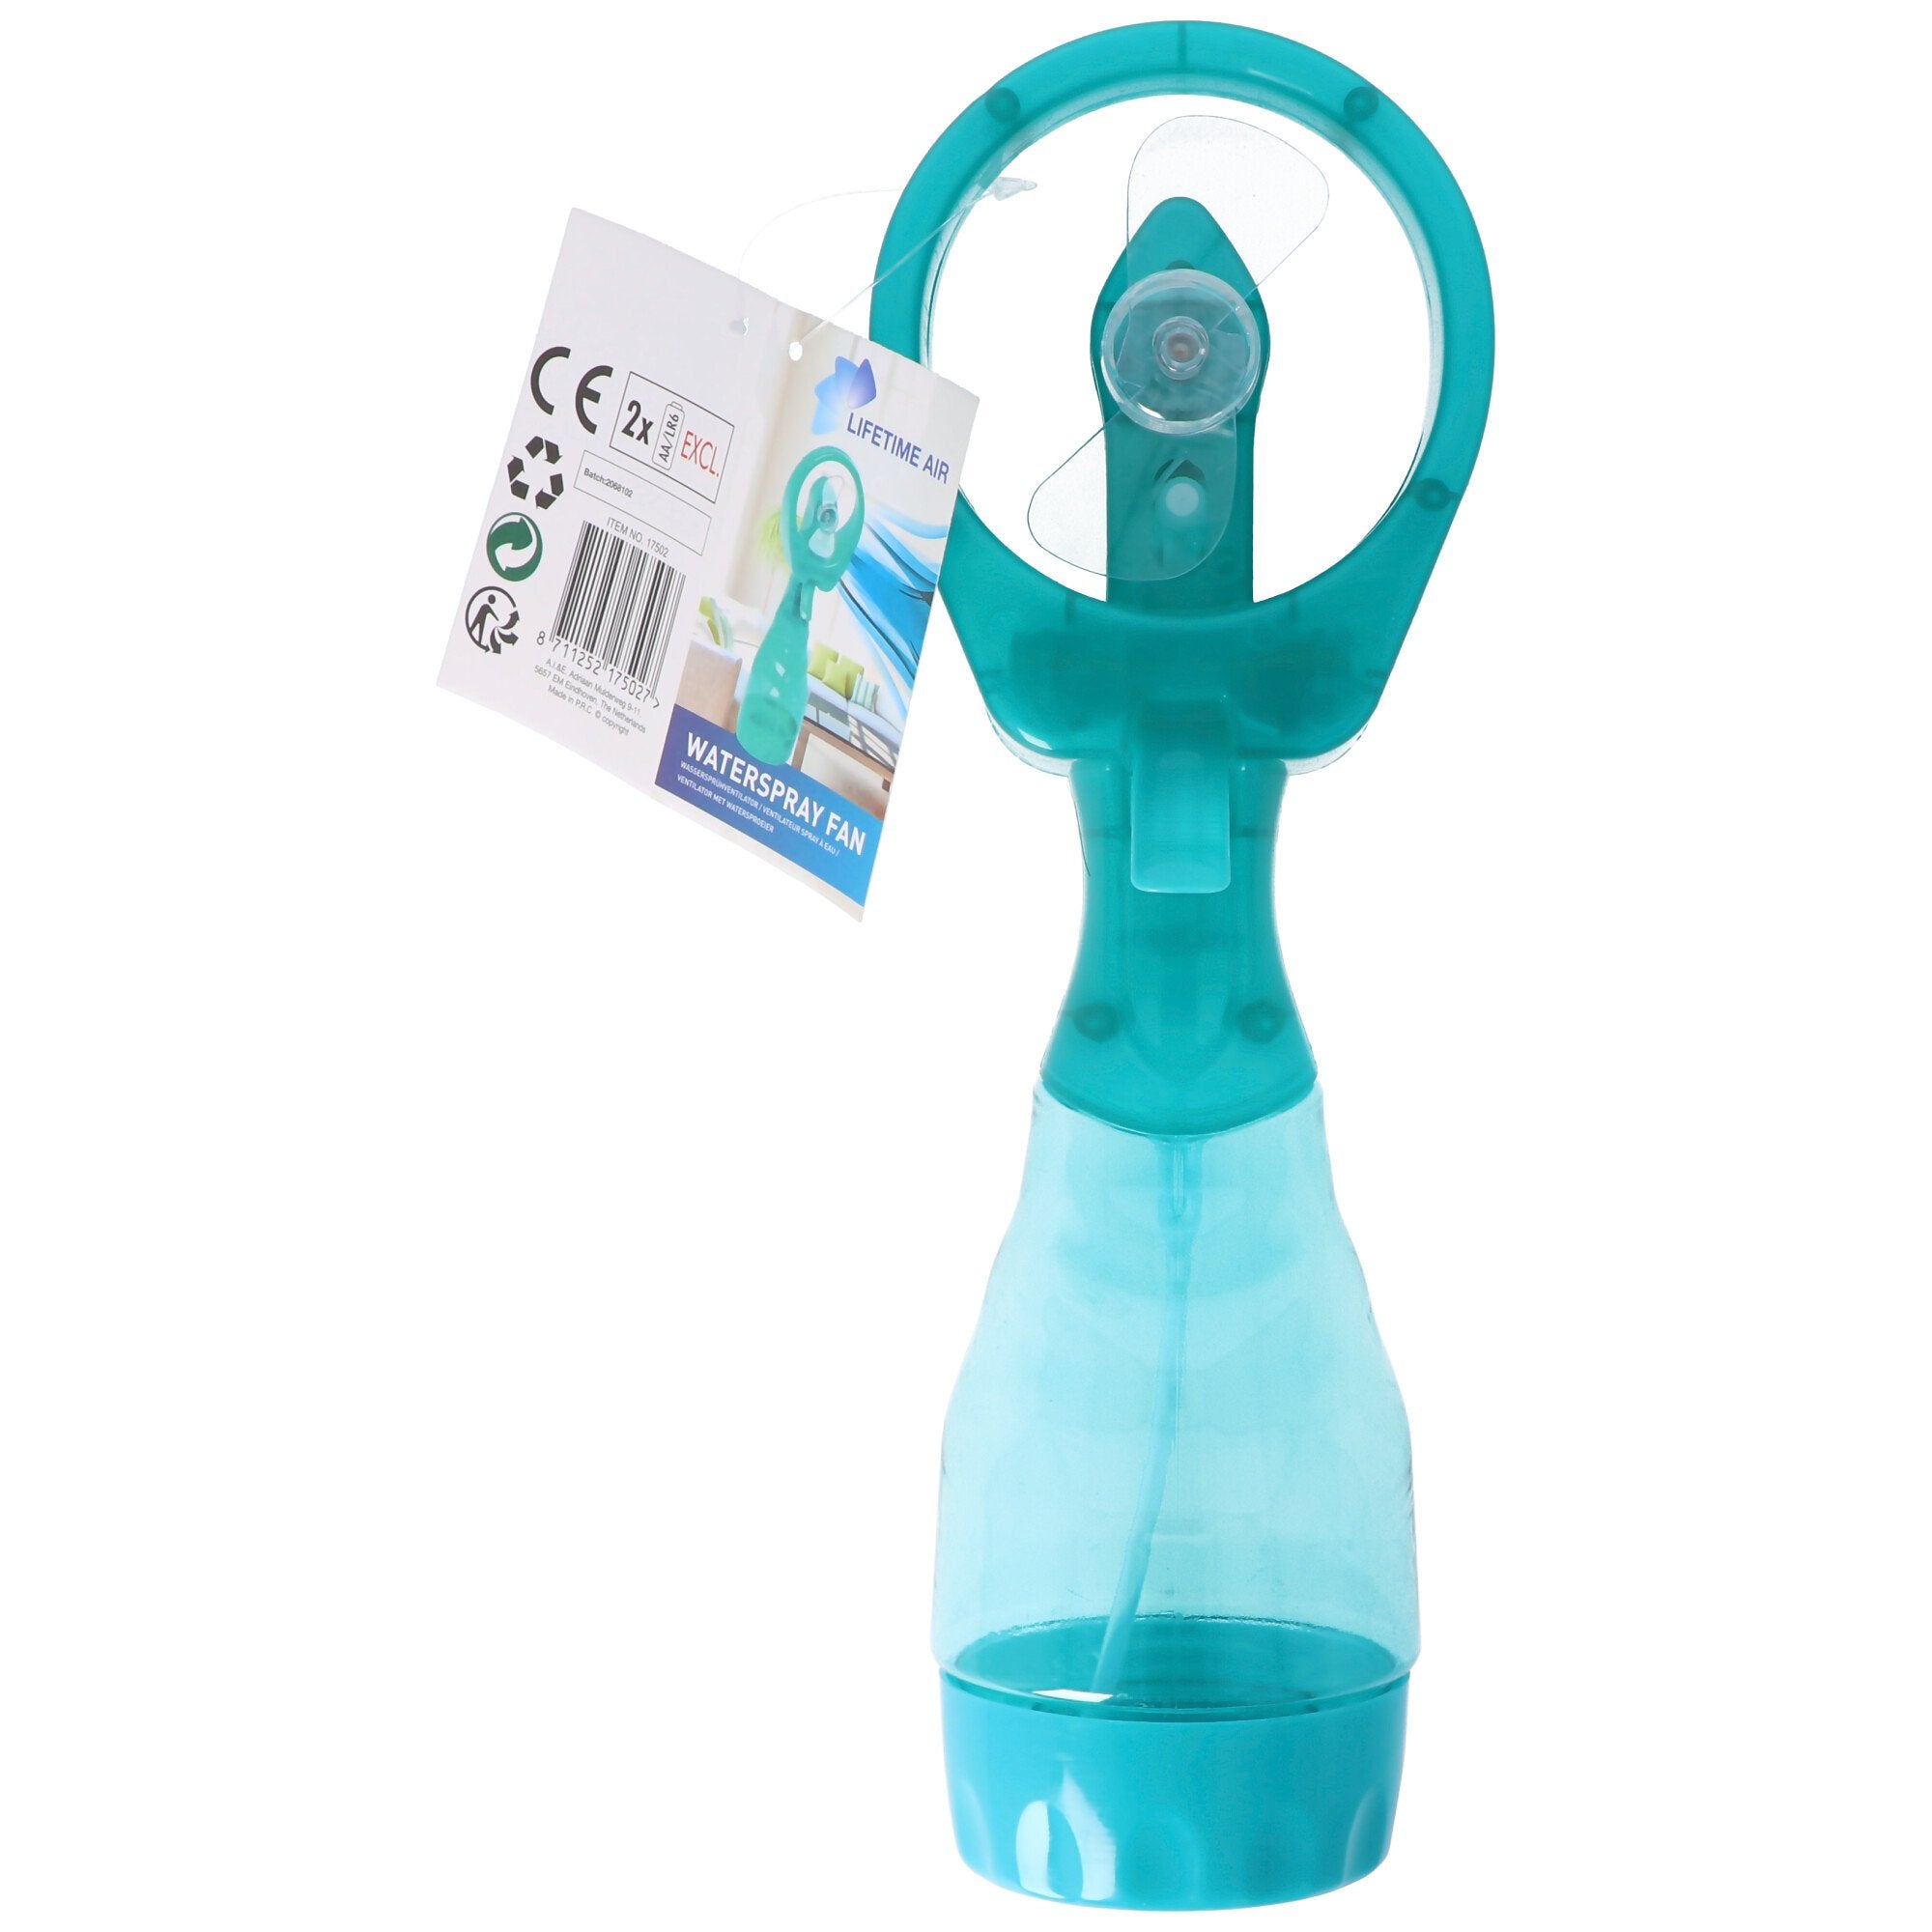 Hand fan with water atomizer, water spray fan, fan with spray bottle, assorted colors